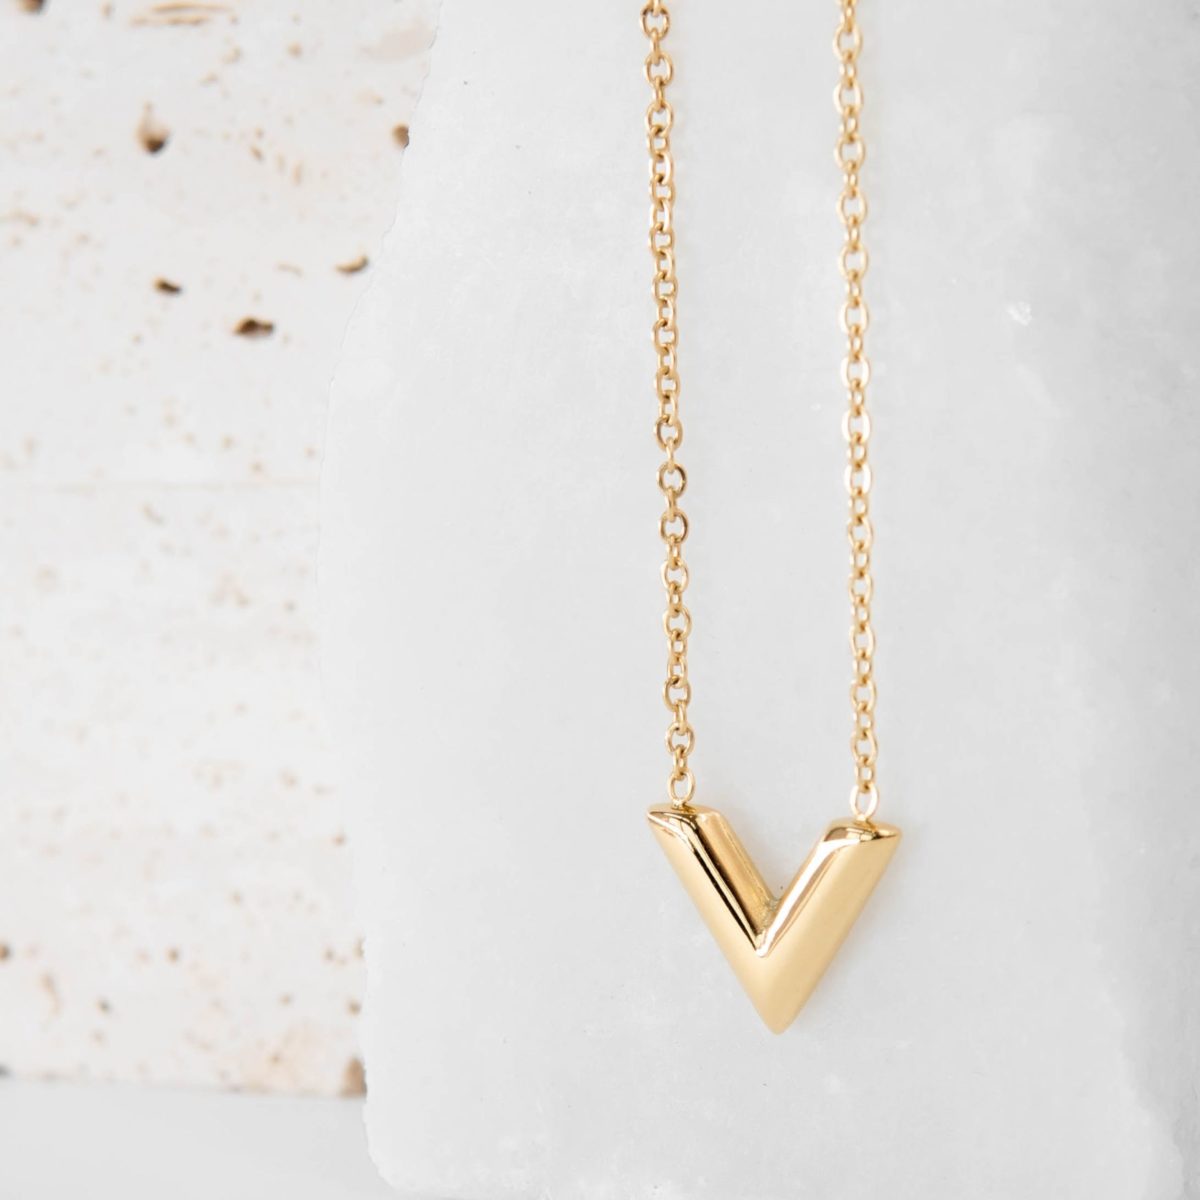 https://m.clubbella.co/product/vermont-gold-necklace/ Vermont necklace Gold (3)